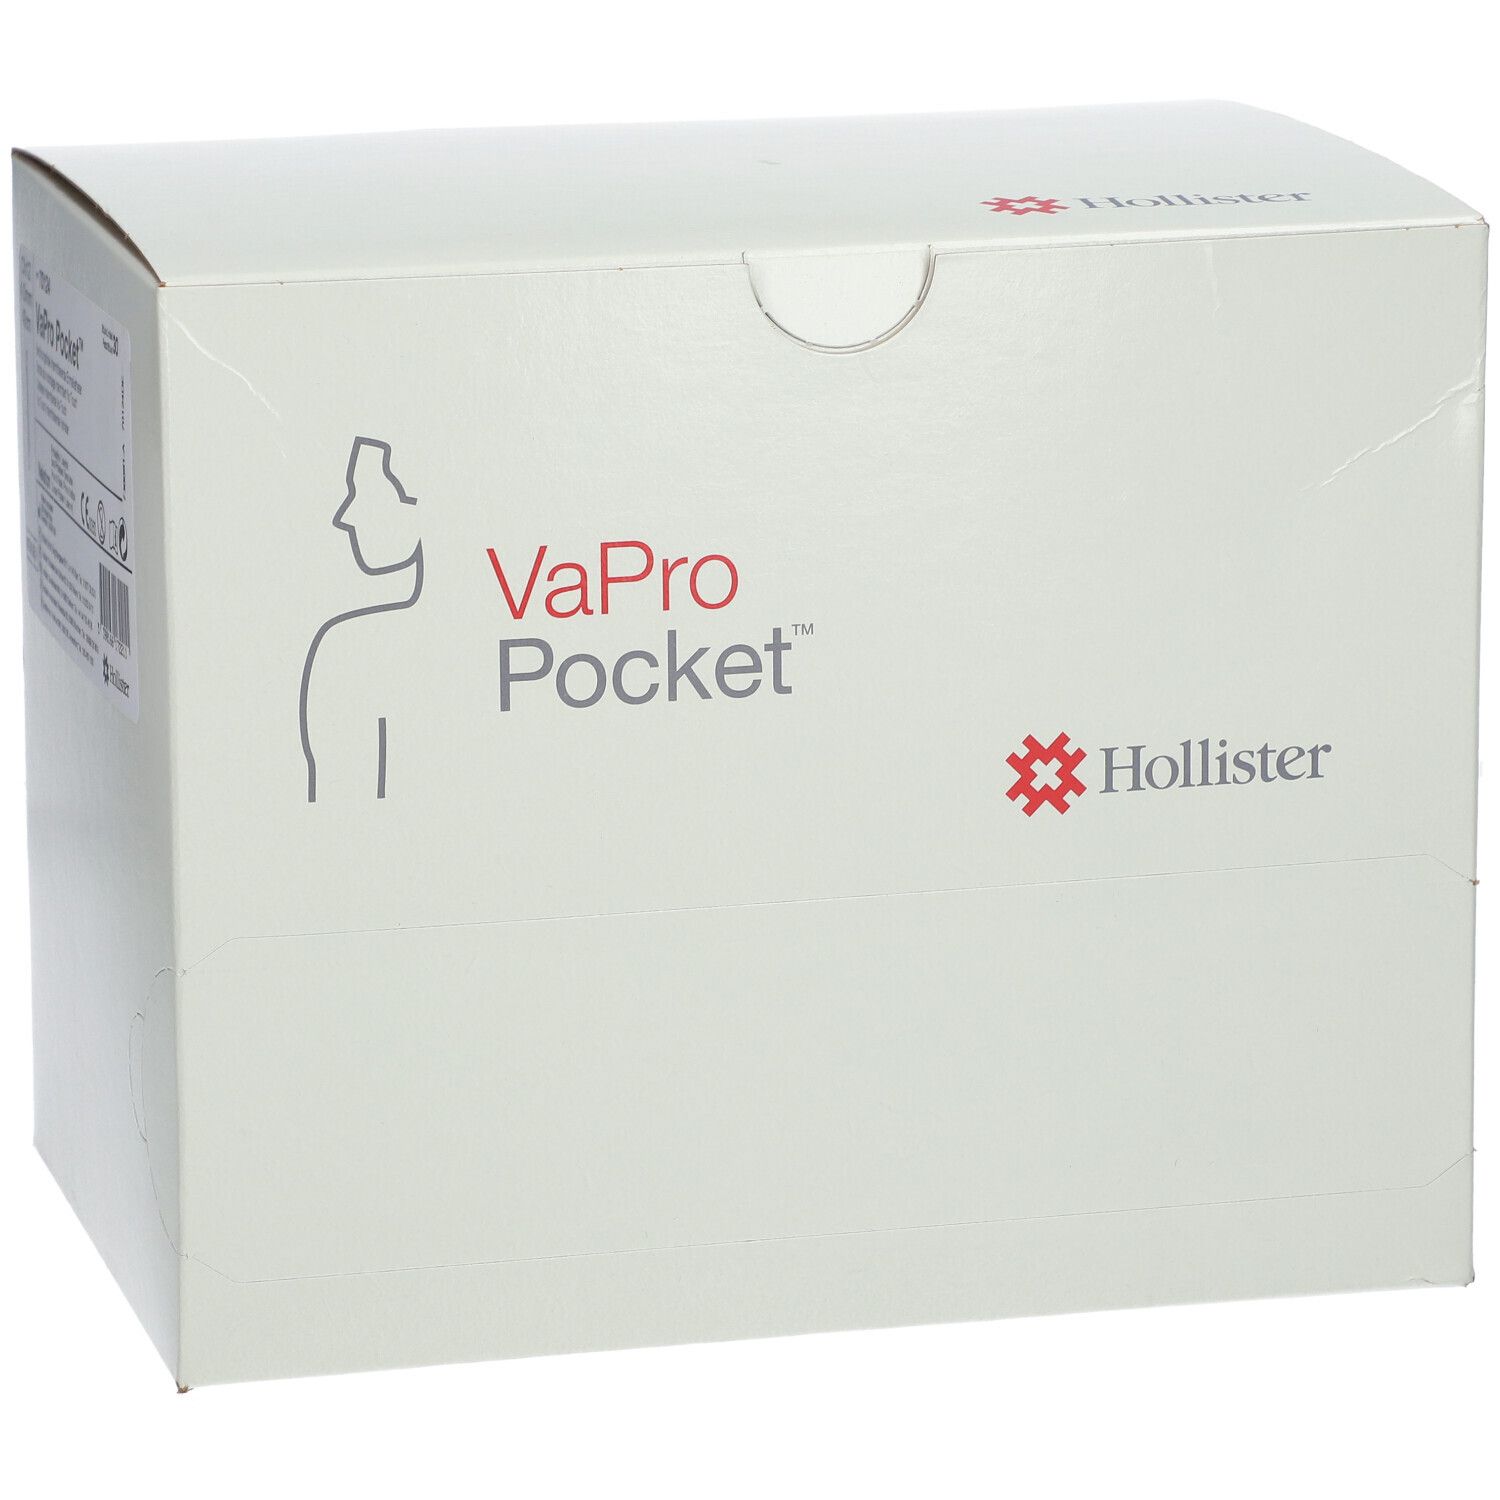 Hollister VaPro Pocket Cathéter Intermittent CH12 70124